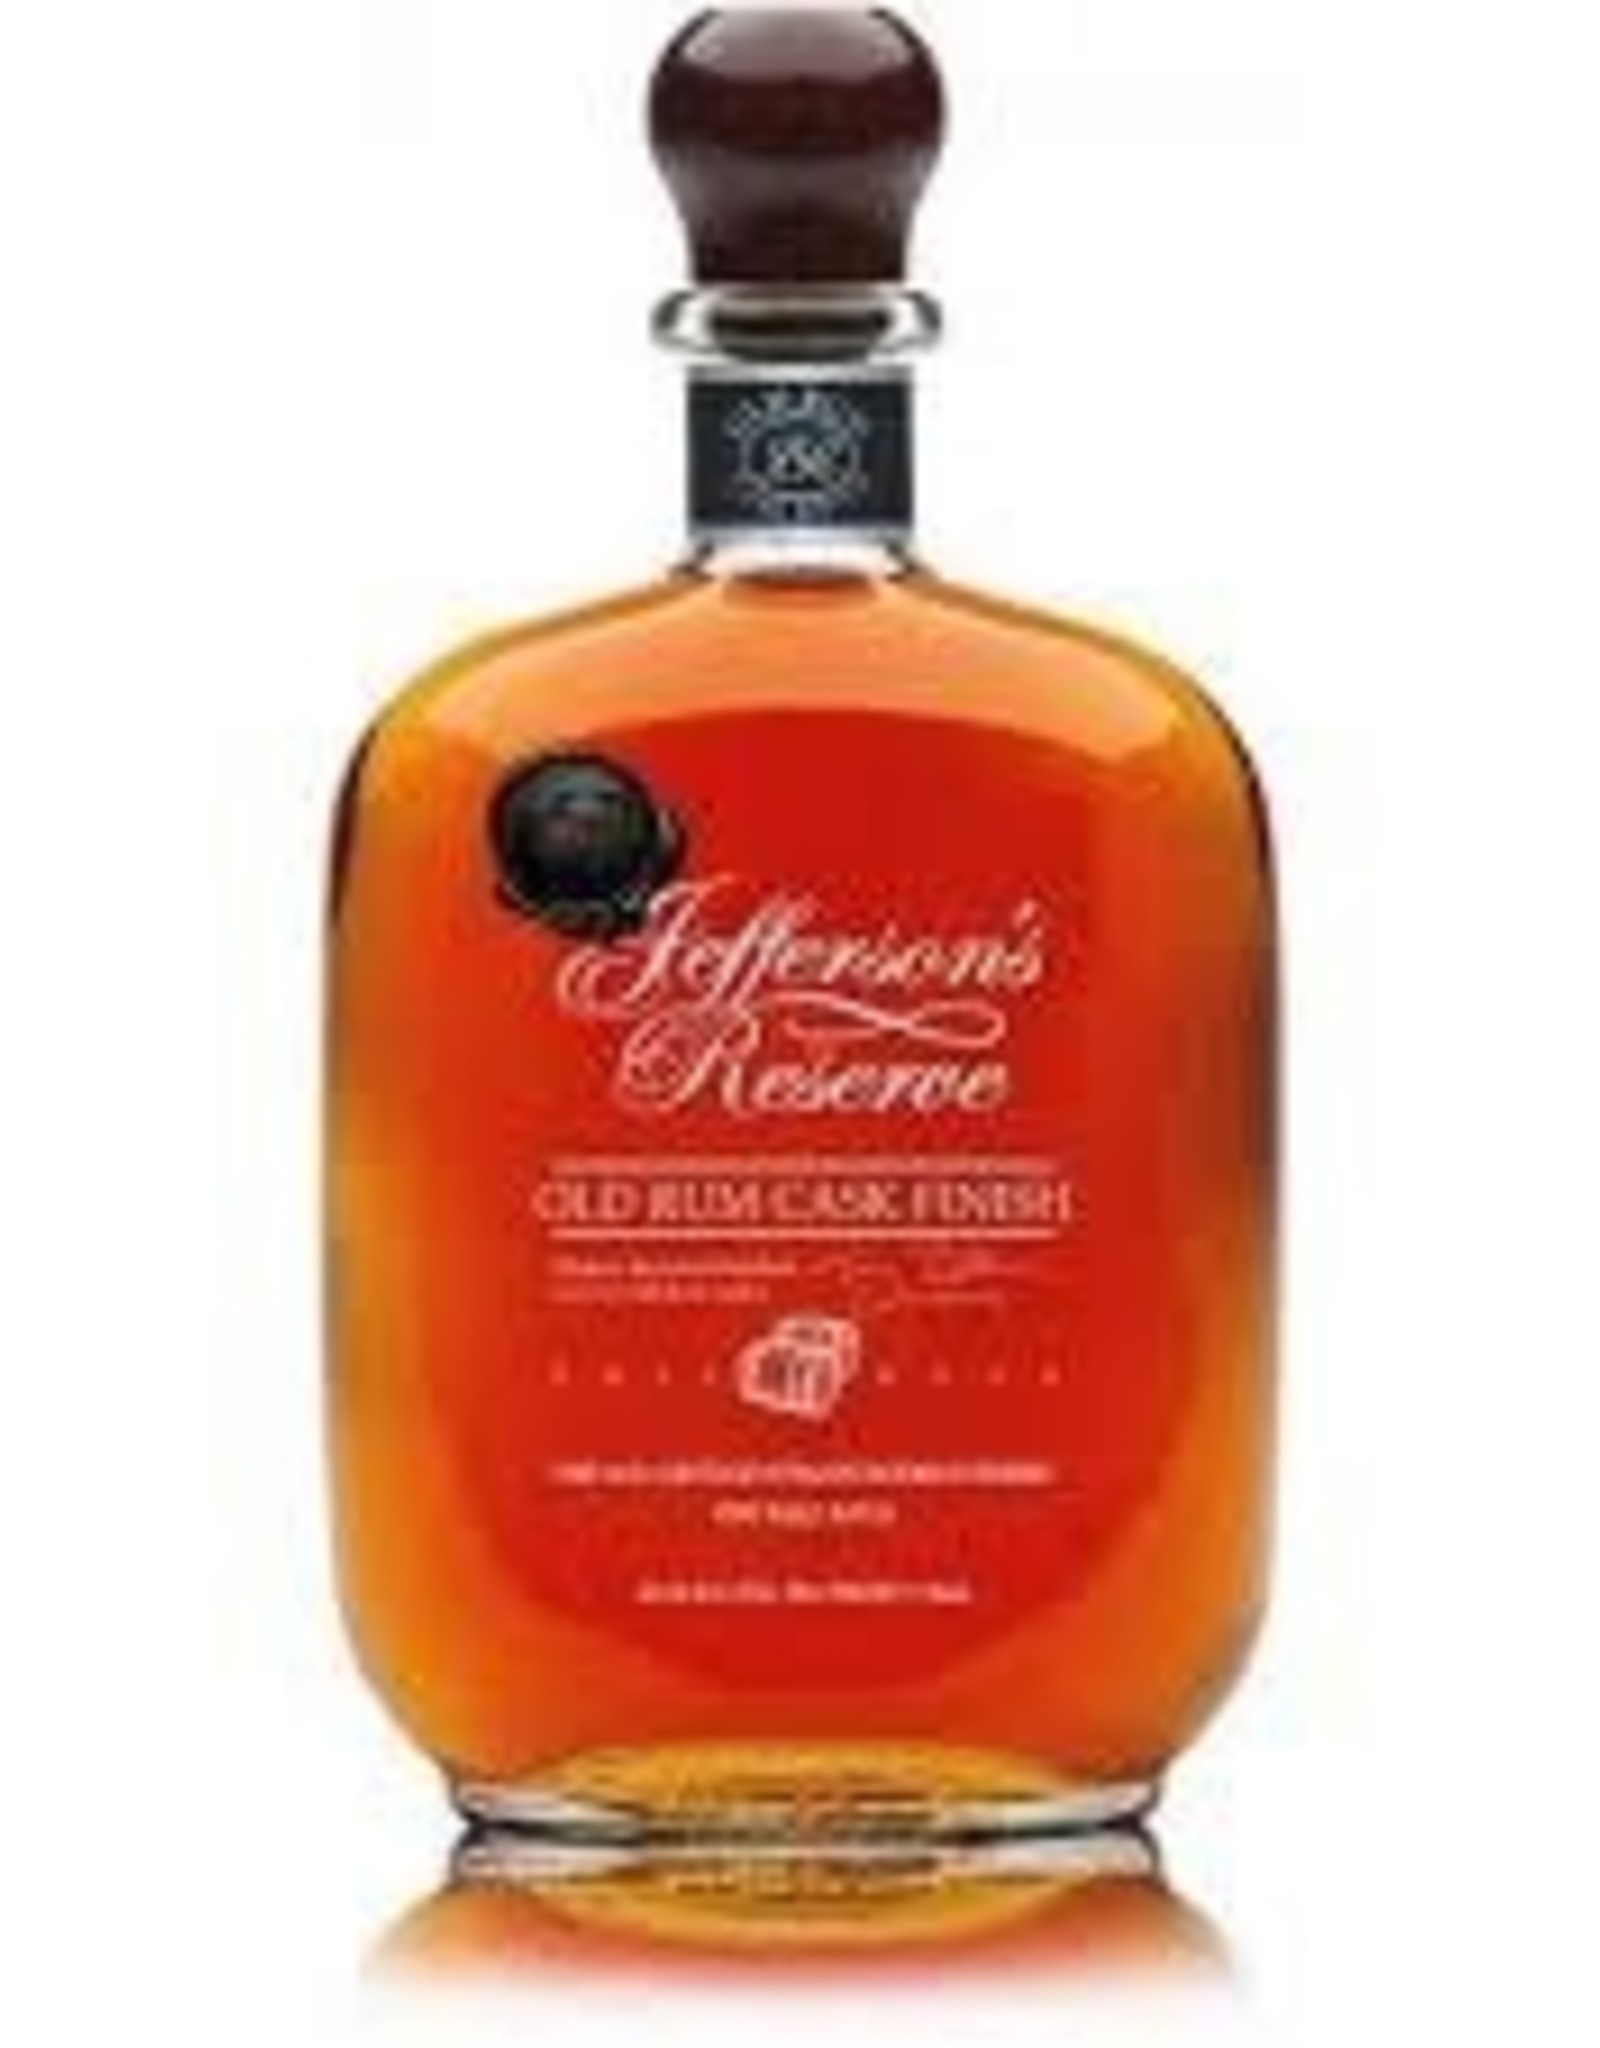 Jefferson's Reserve Old Rum Cask Finish Bourbon Whiskey